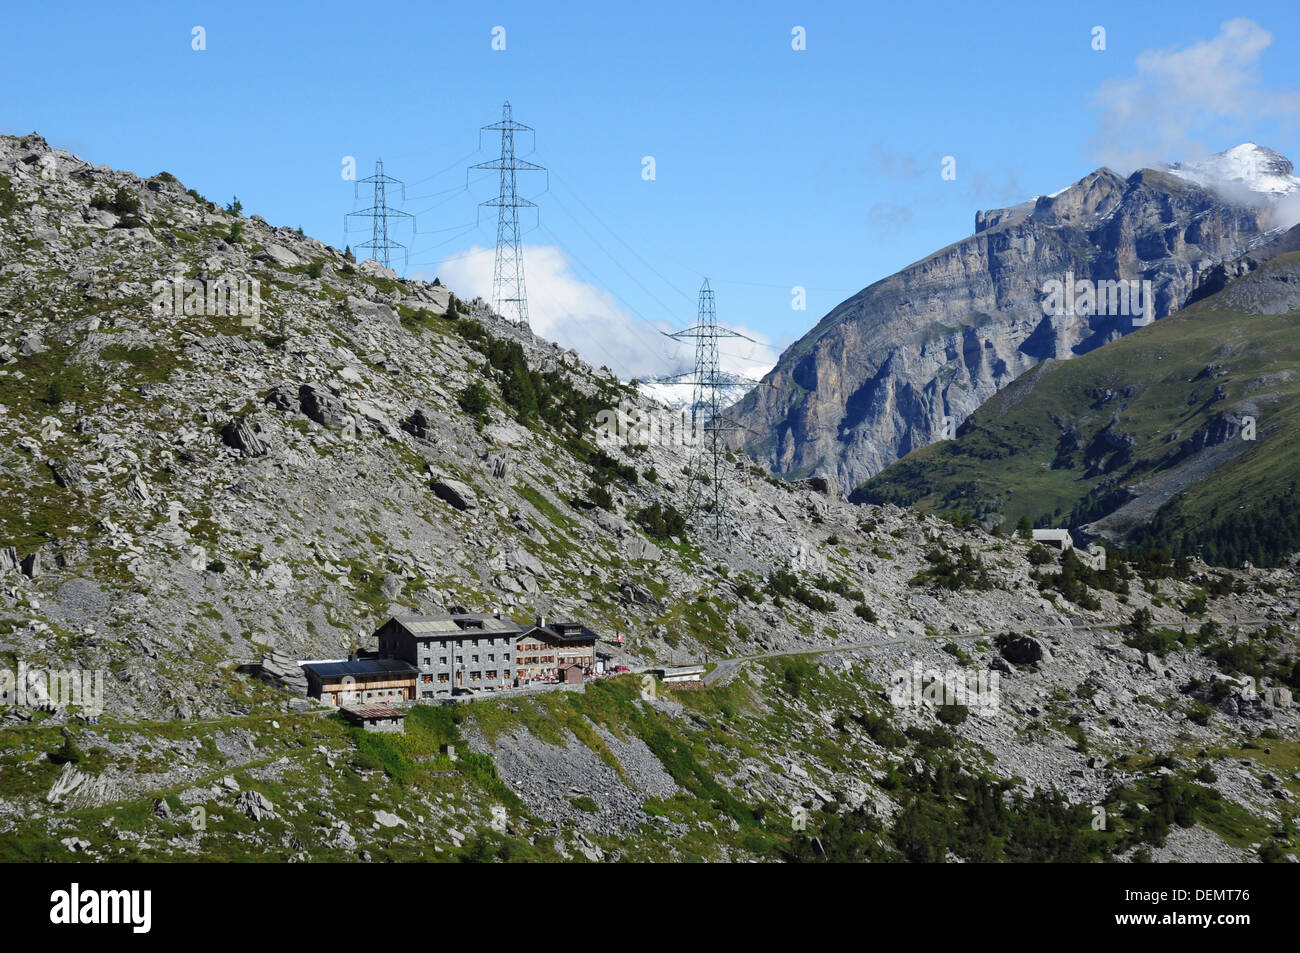 Hotel Schwarenbach and rugged mountain terrain on the Gemmi Pass, Switzerland, Europe Stock Photo